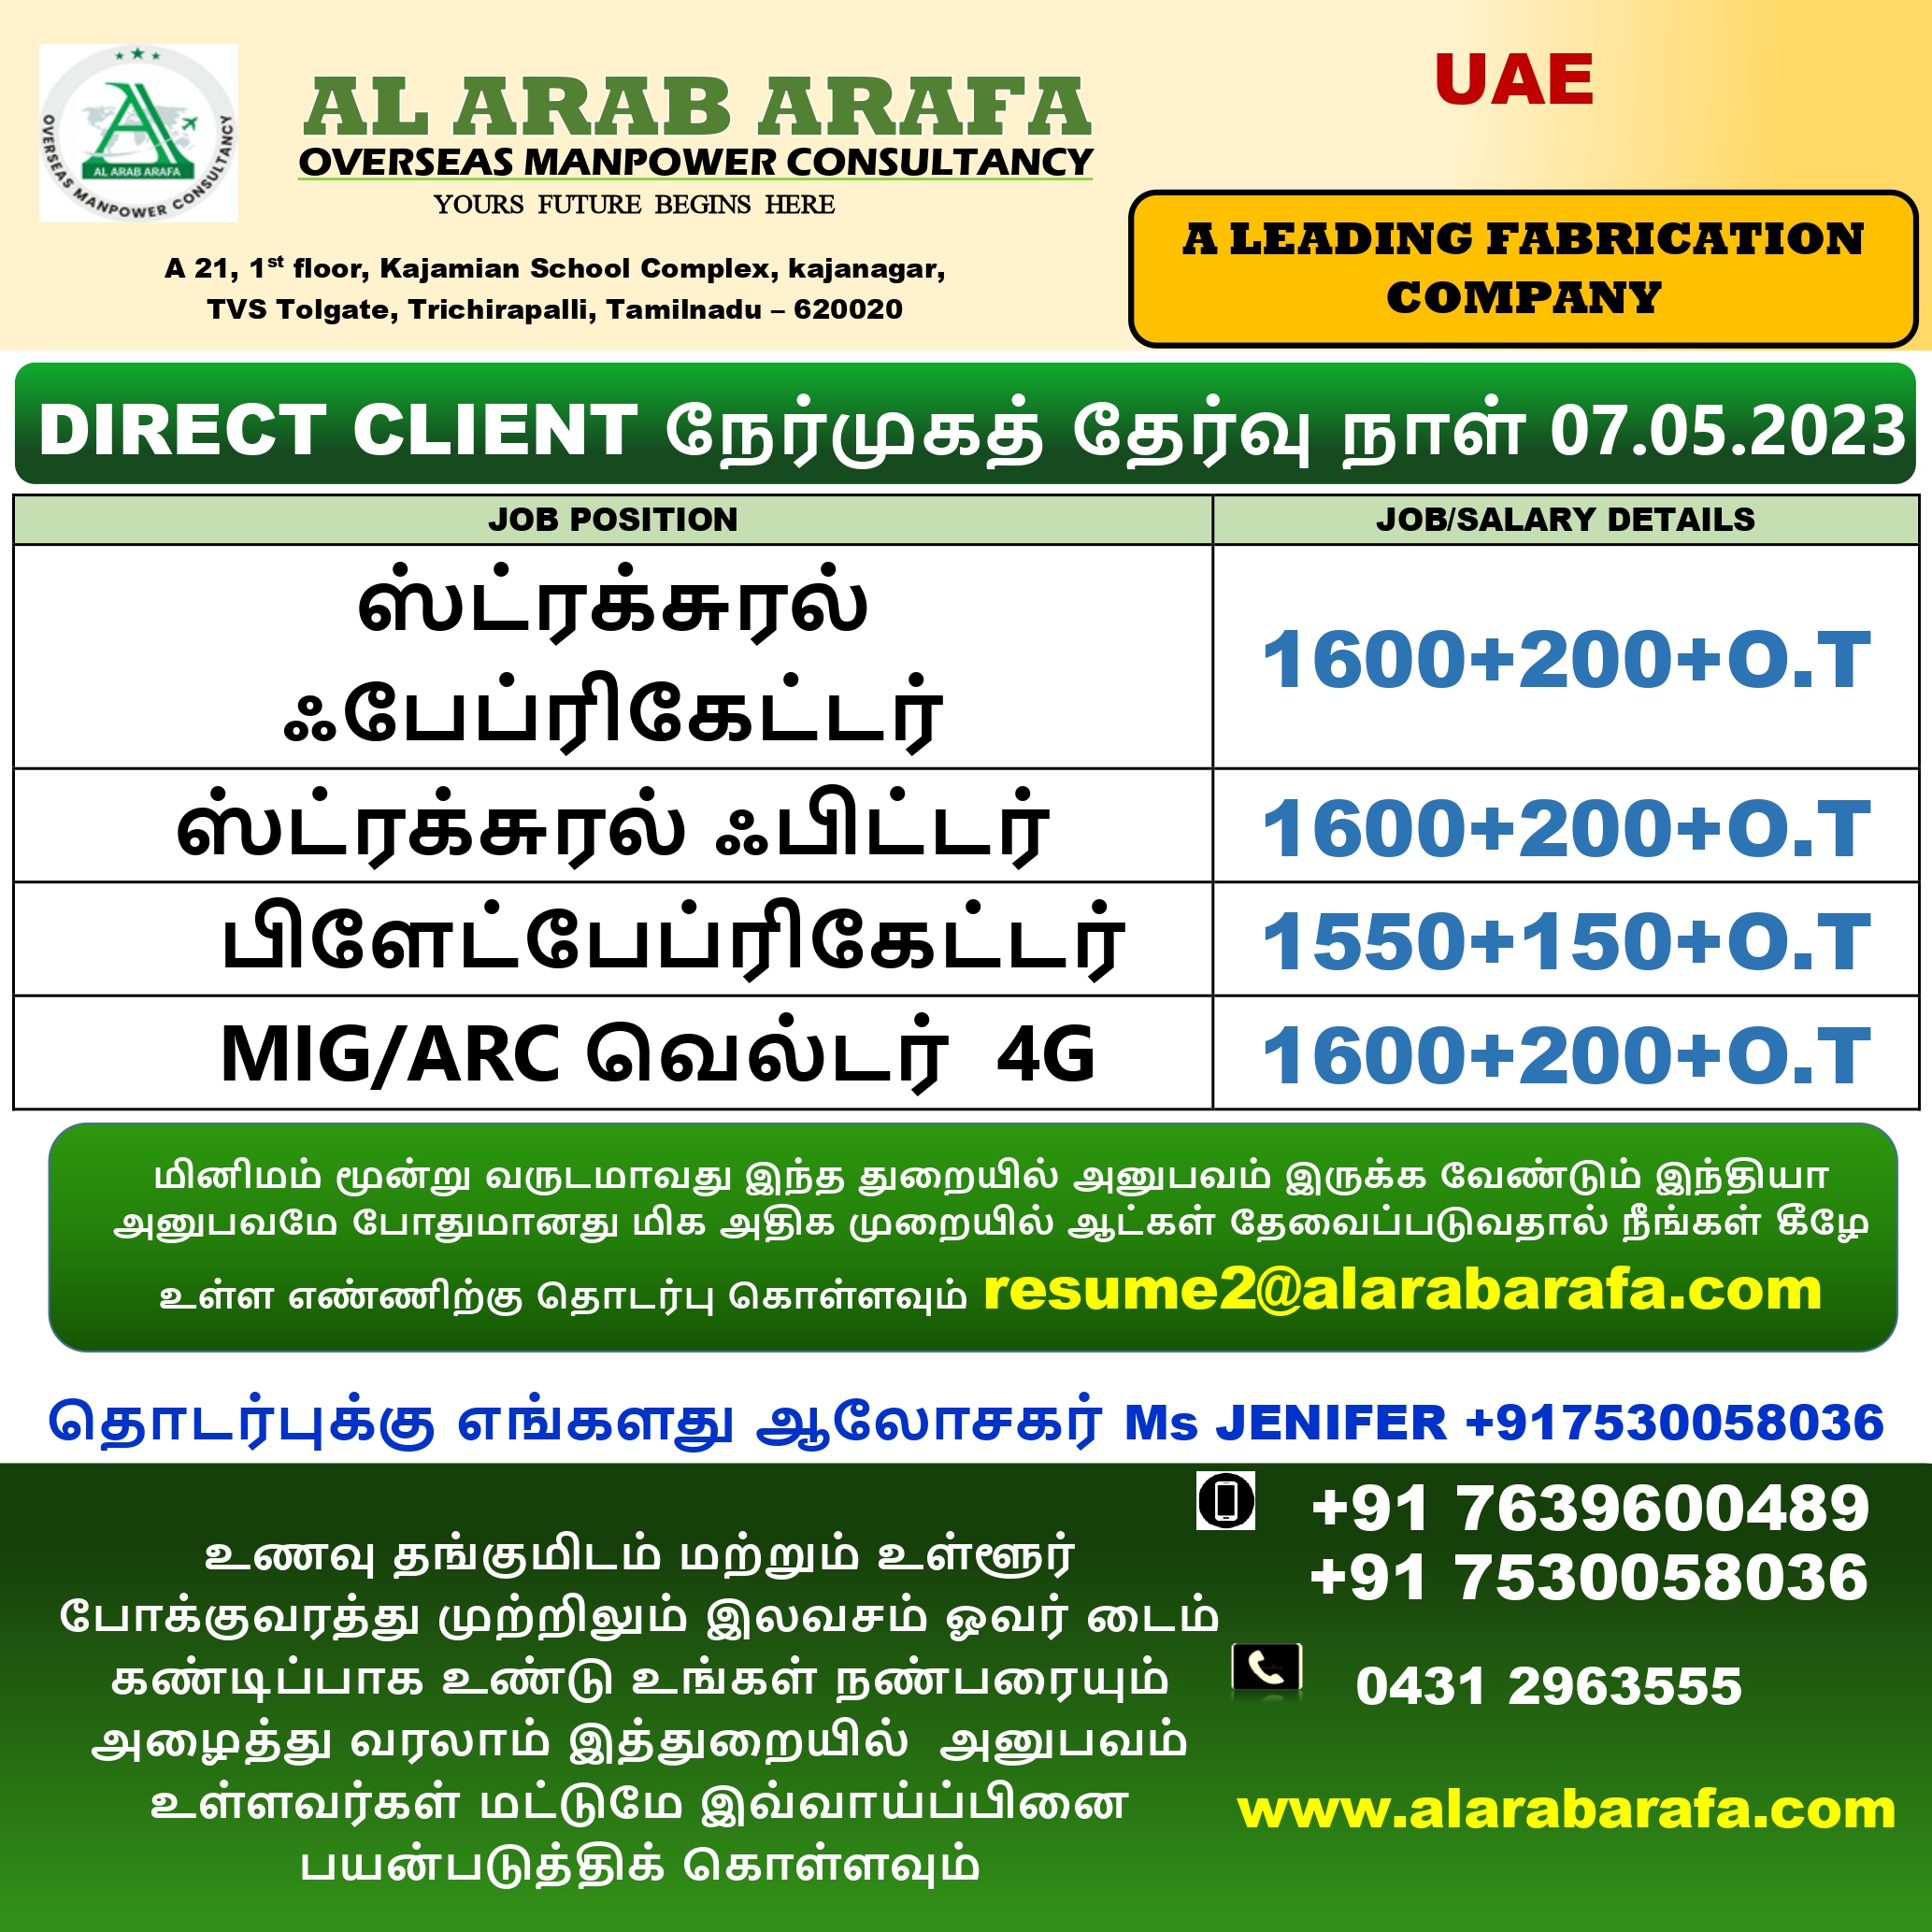 UAE TAMIL_page-0001-de0d5988